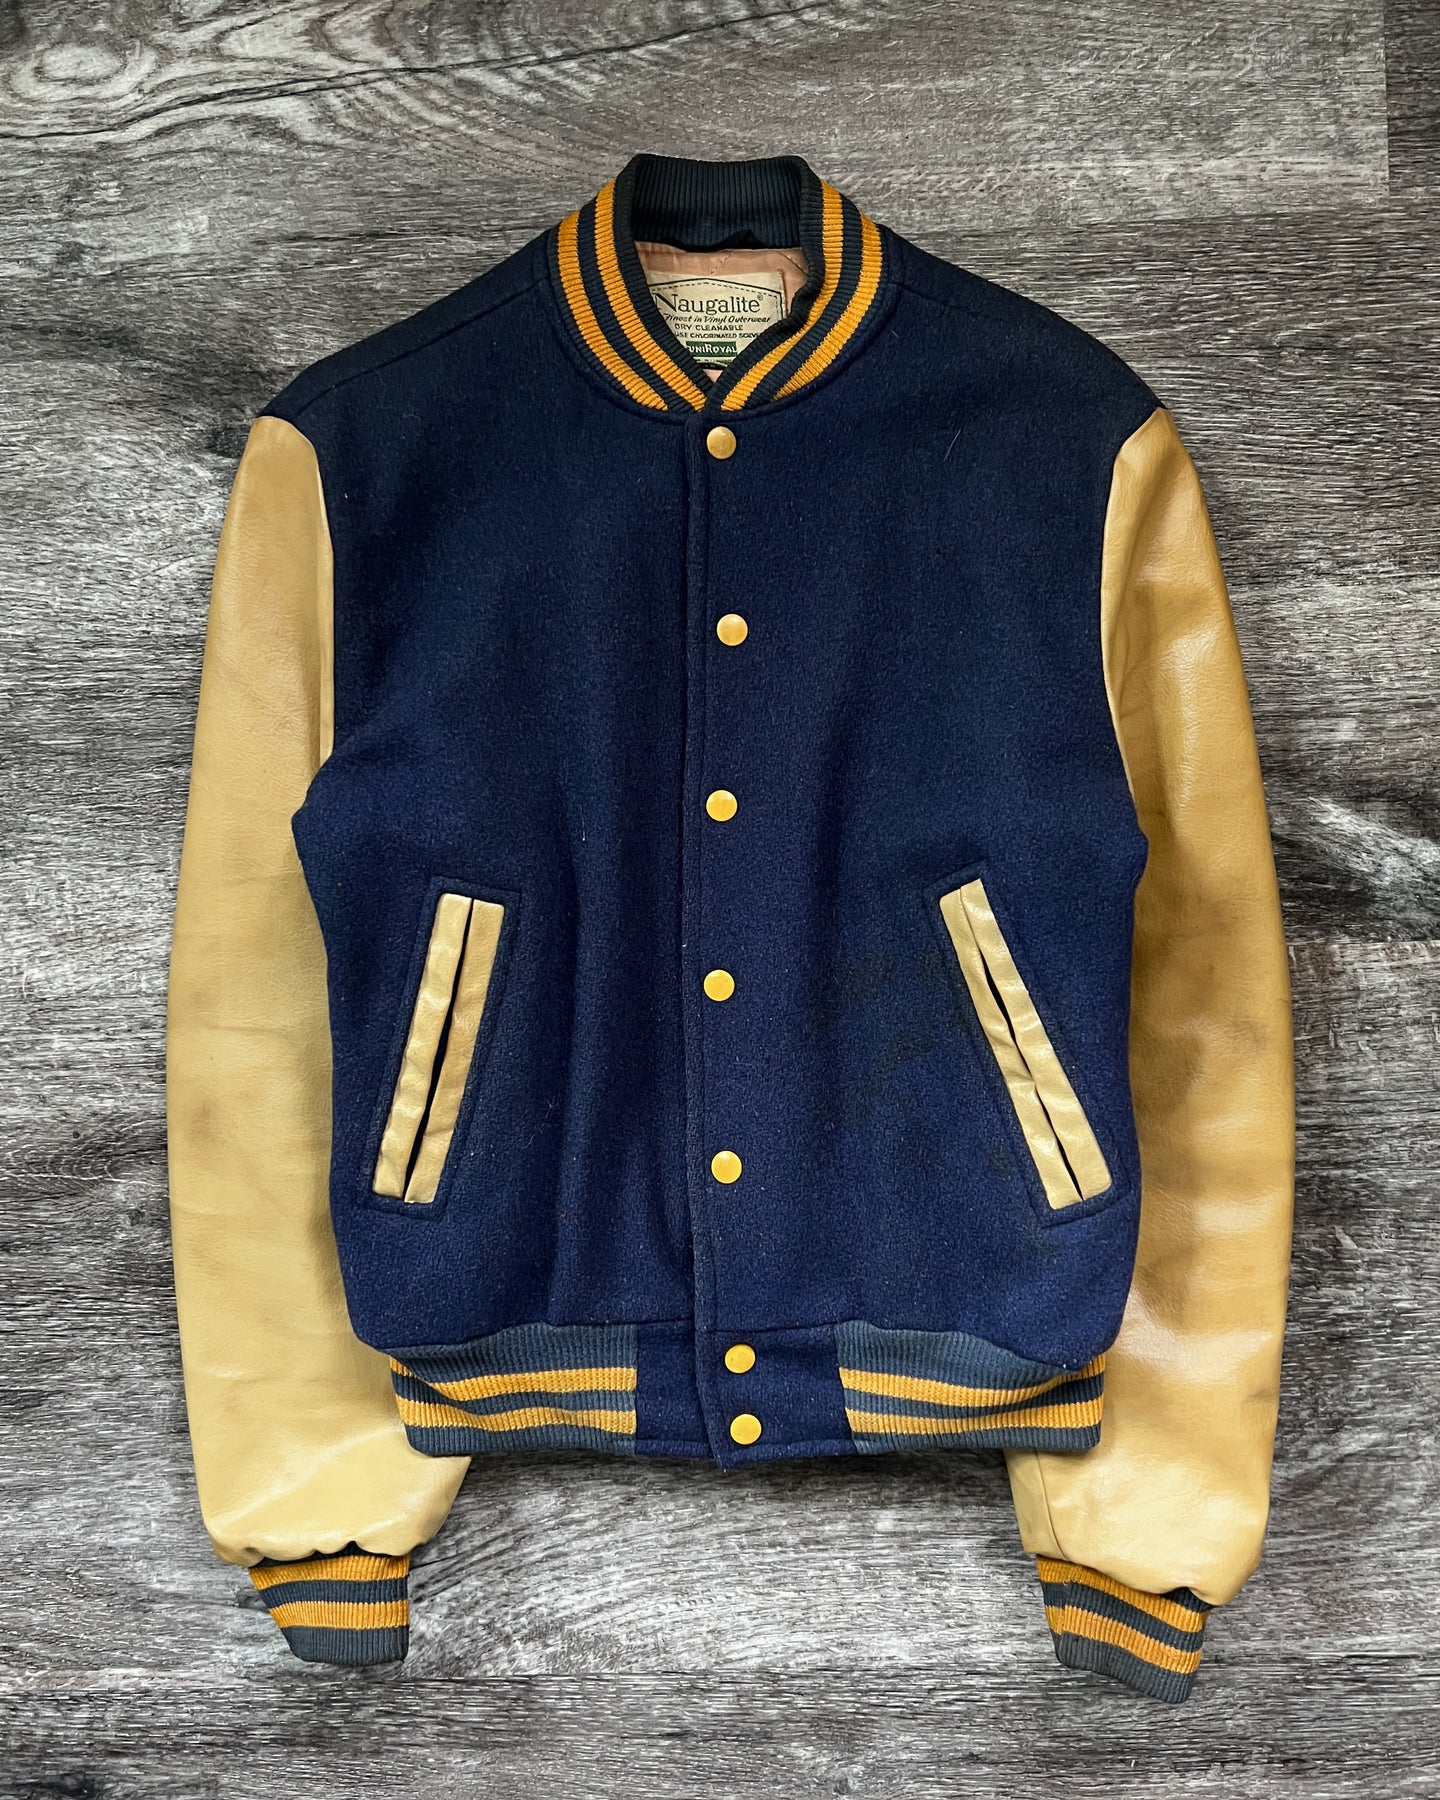 1990s Two Tone Blank Varsity Jacket - Size Small